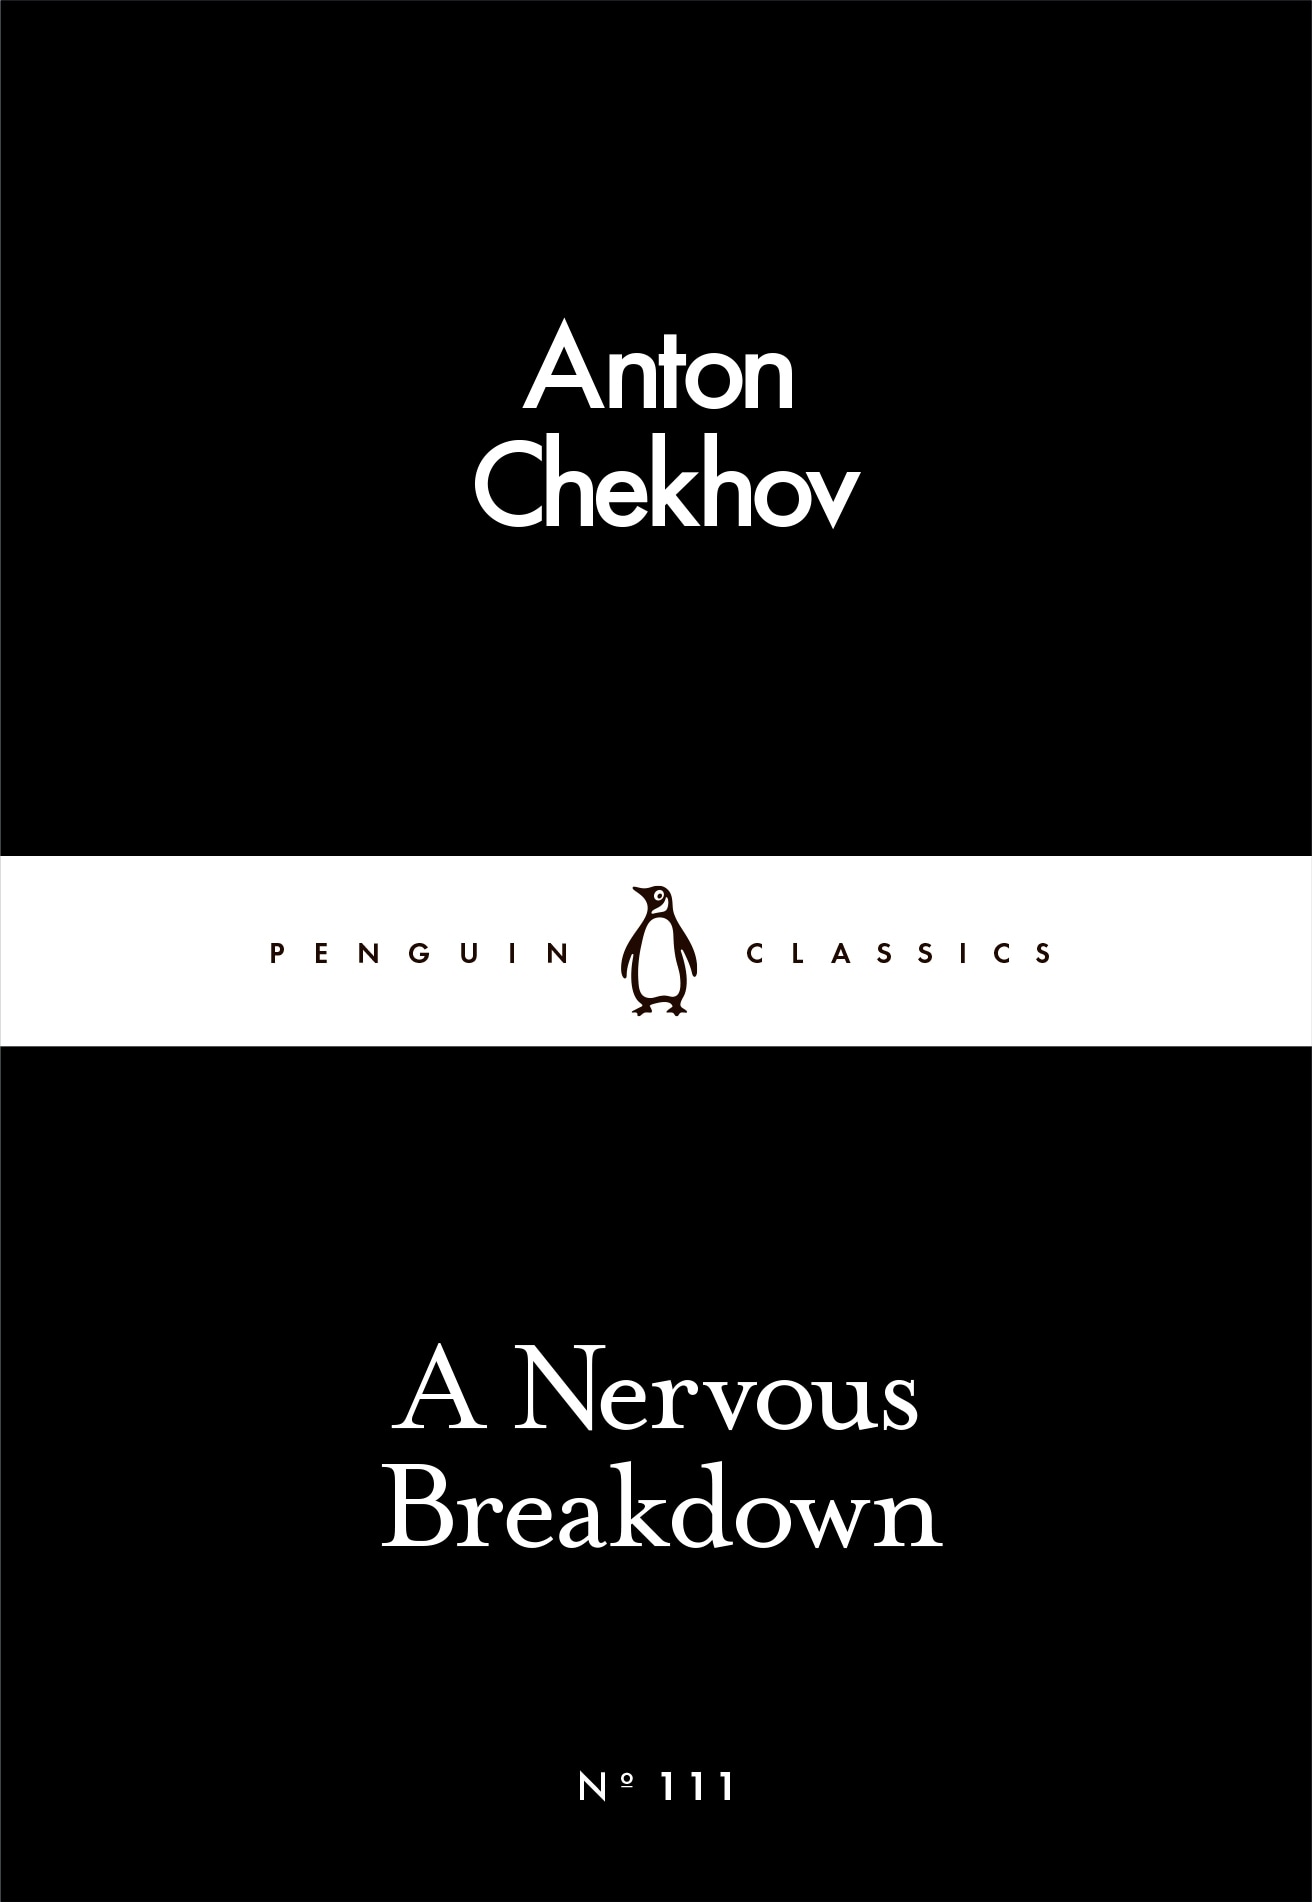 Book “A Nervous Breakdown” by Anton Chekhov — March 3, 2016